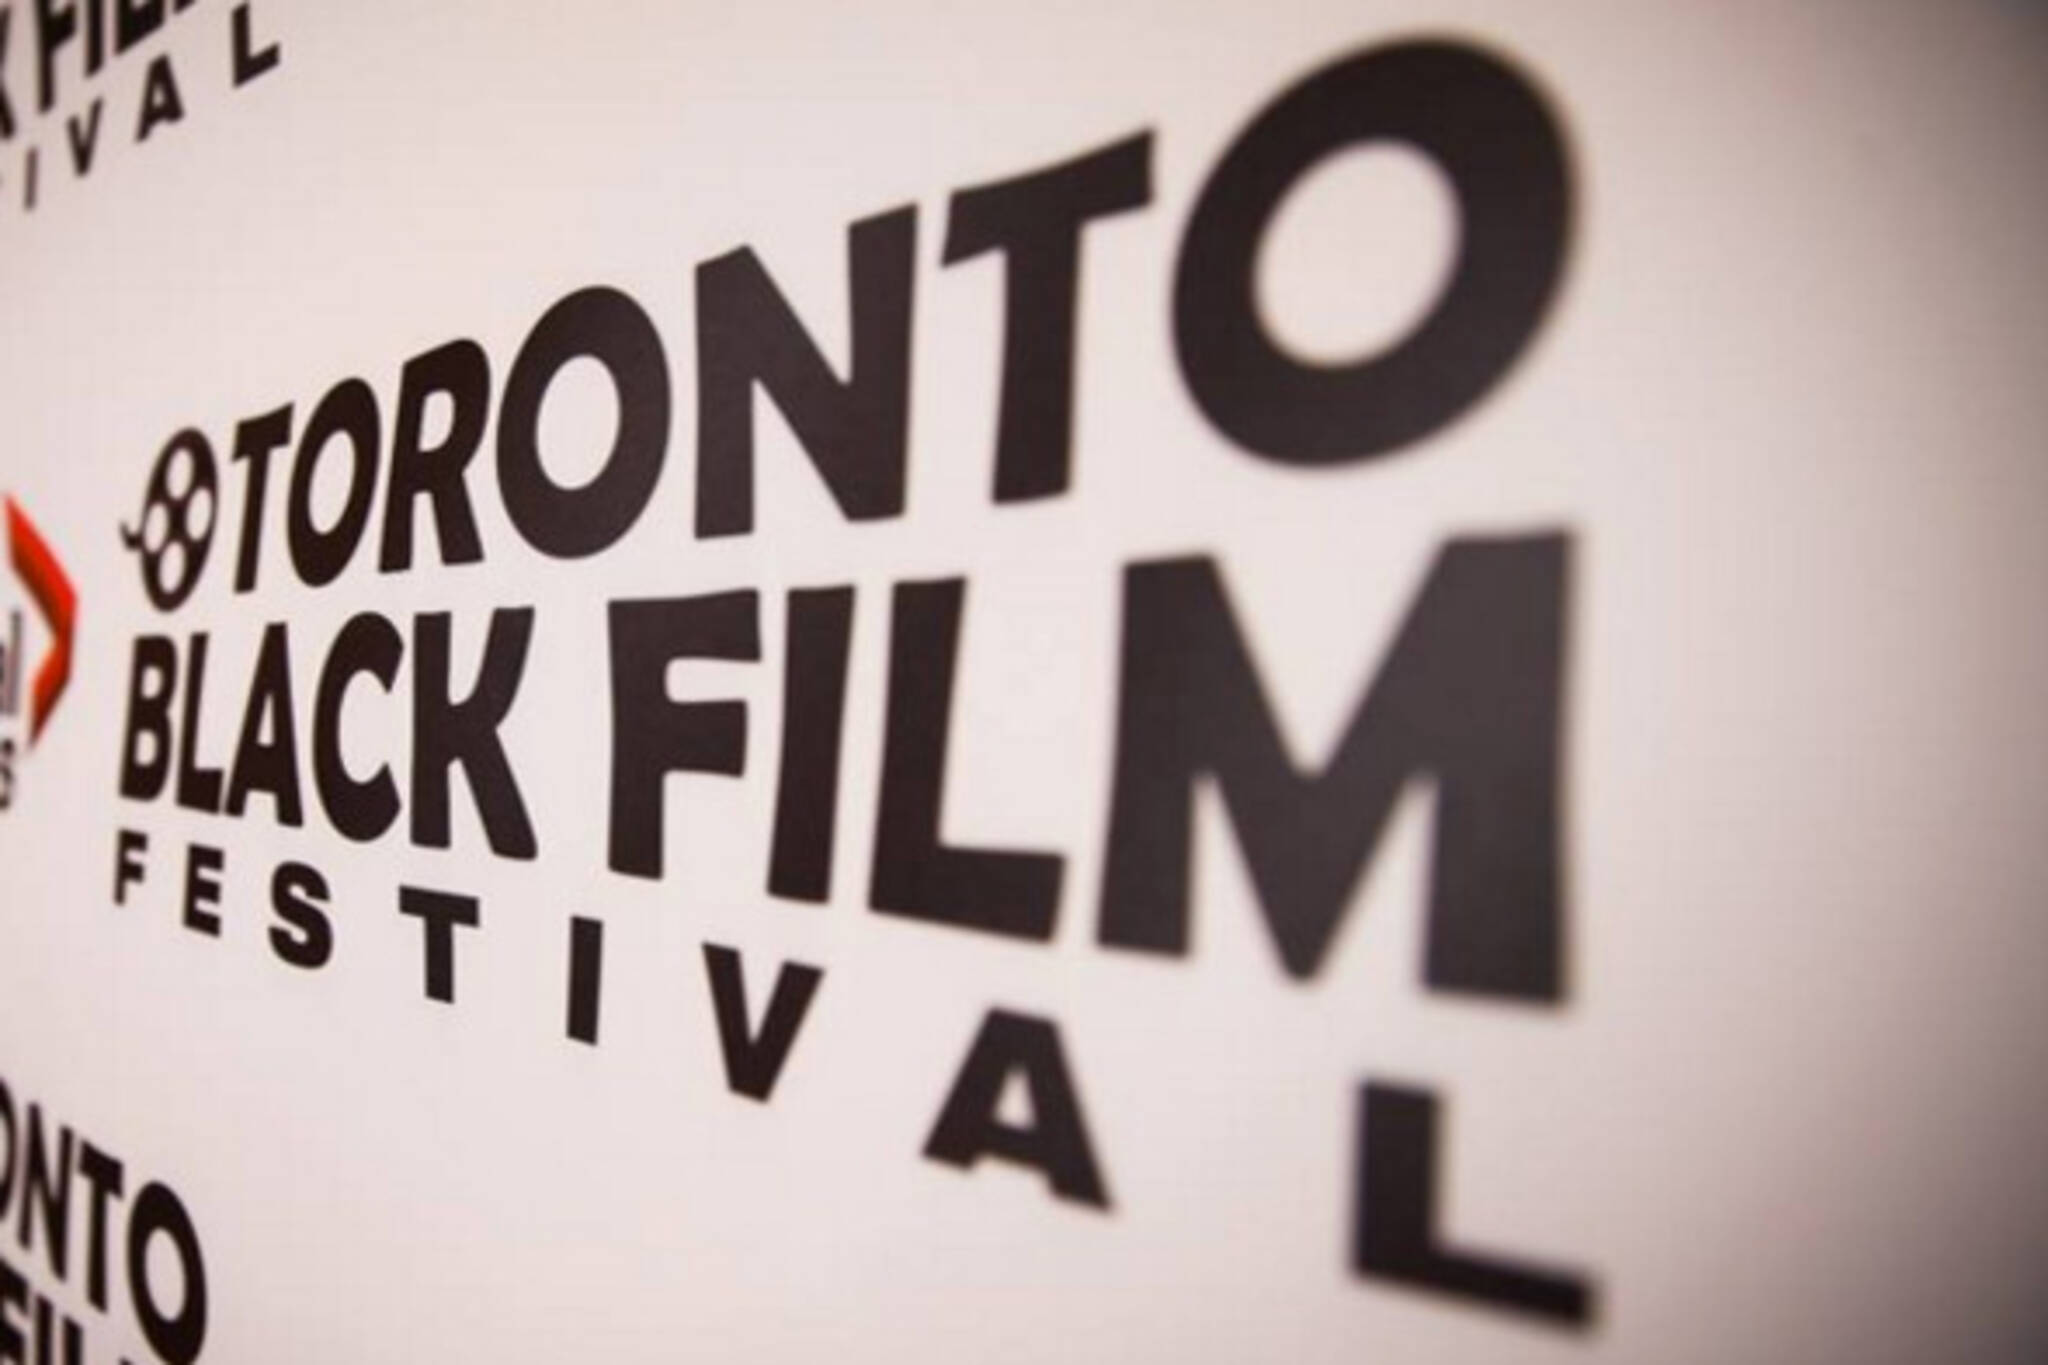 Toronto Black Film Festival